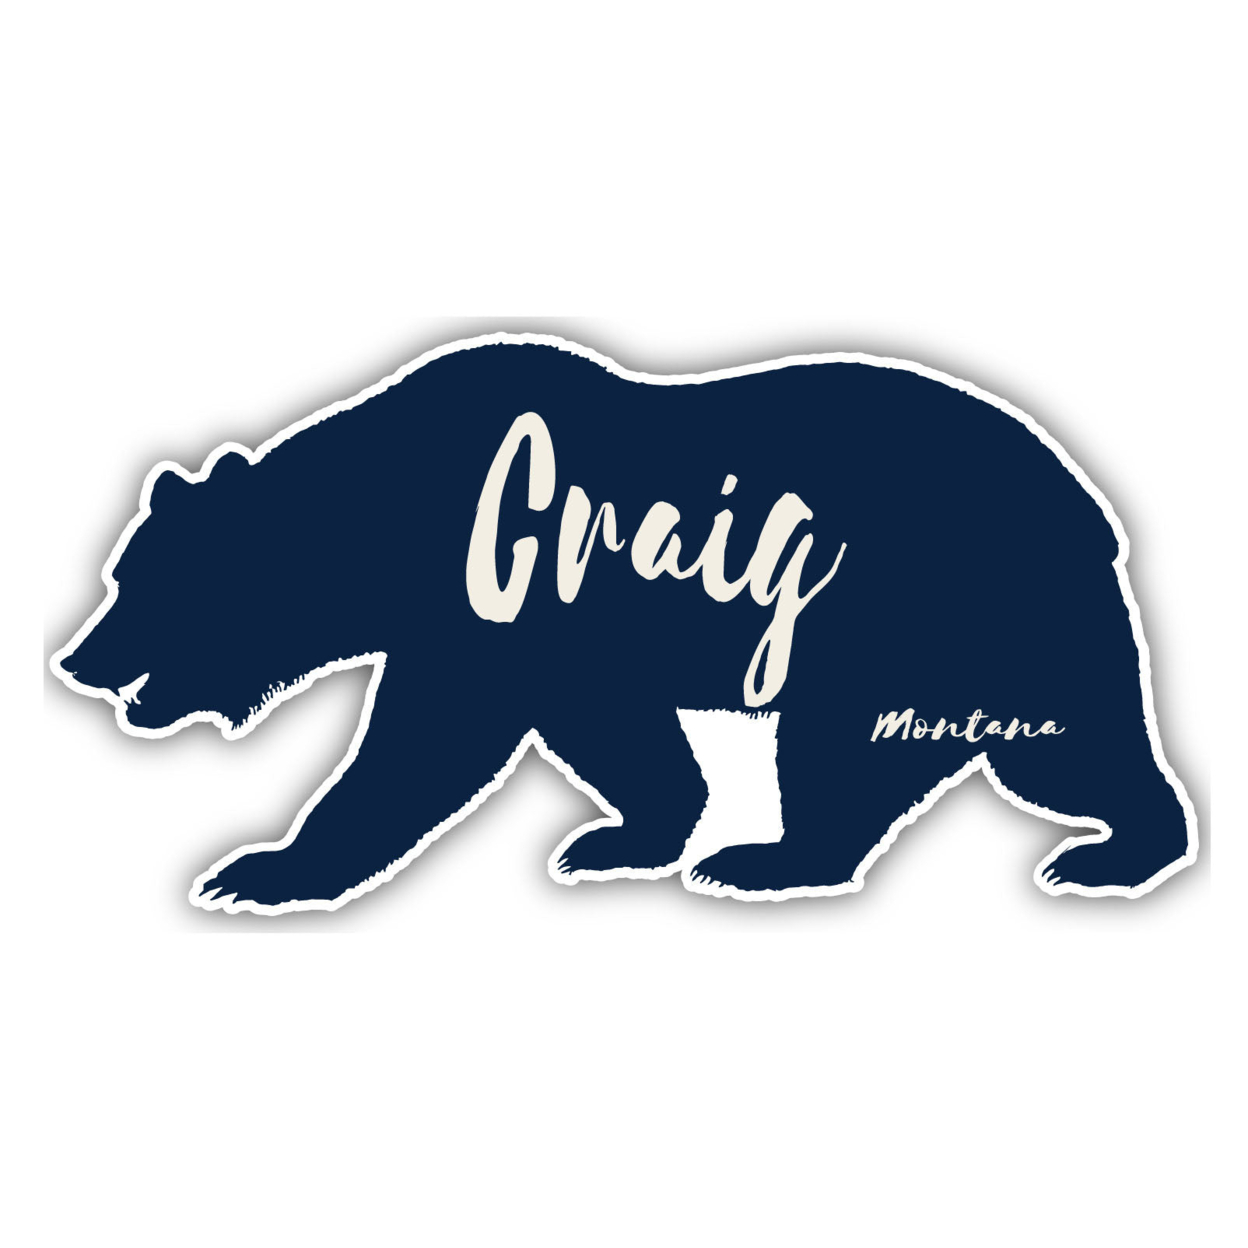 Craig Montana Souvenir Decorative Stickers (Choose Theme And Size) - 4-Pack, 10-Inch, Bear